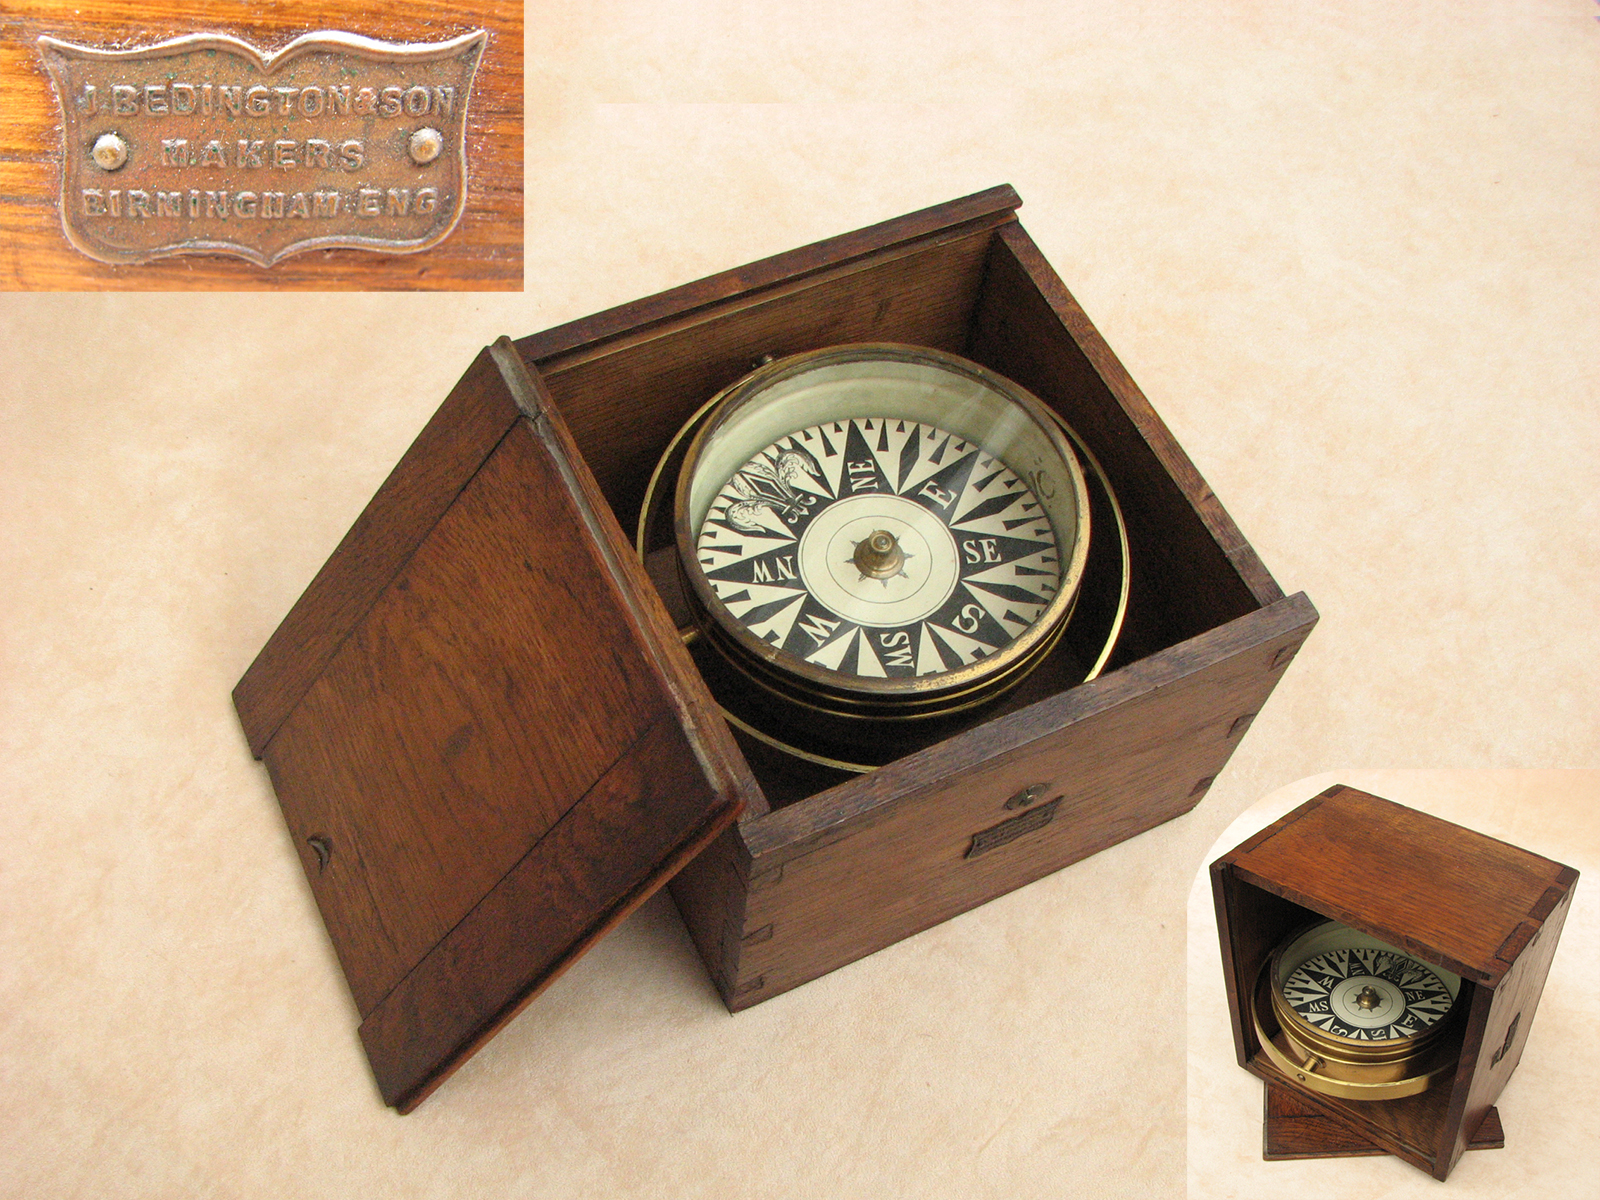 Mid 19th Century Mariners gimballed compass signed J Bedington